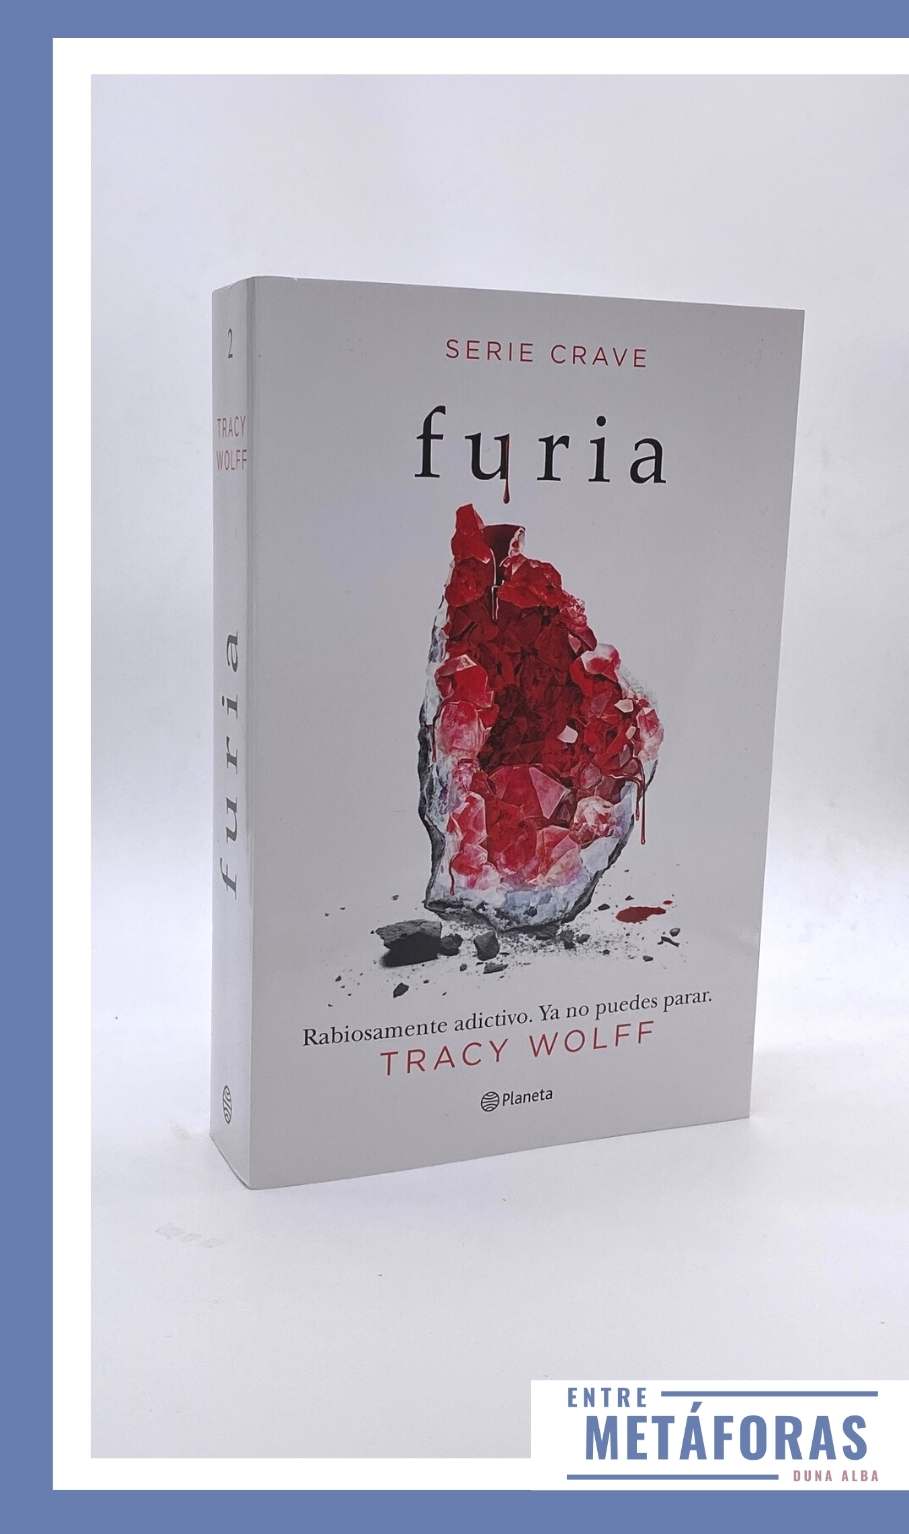 Furia (Crave #2), de Tracy Wolff